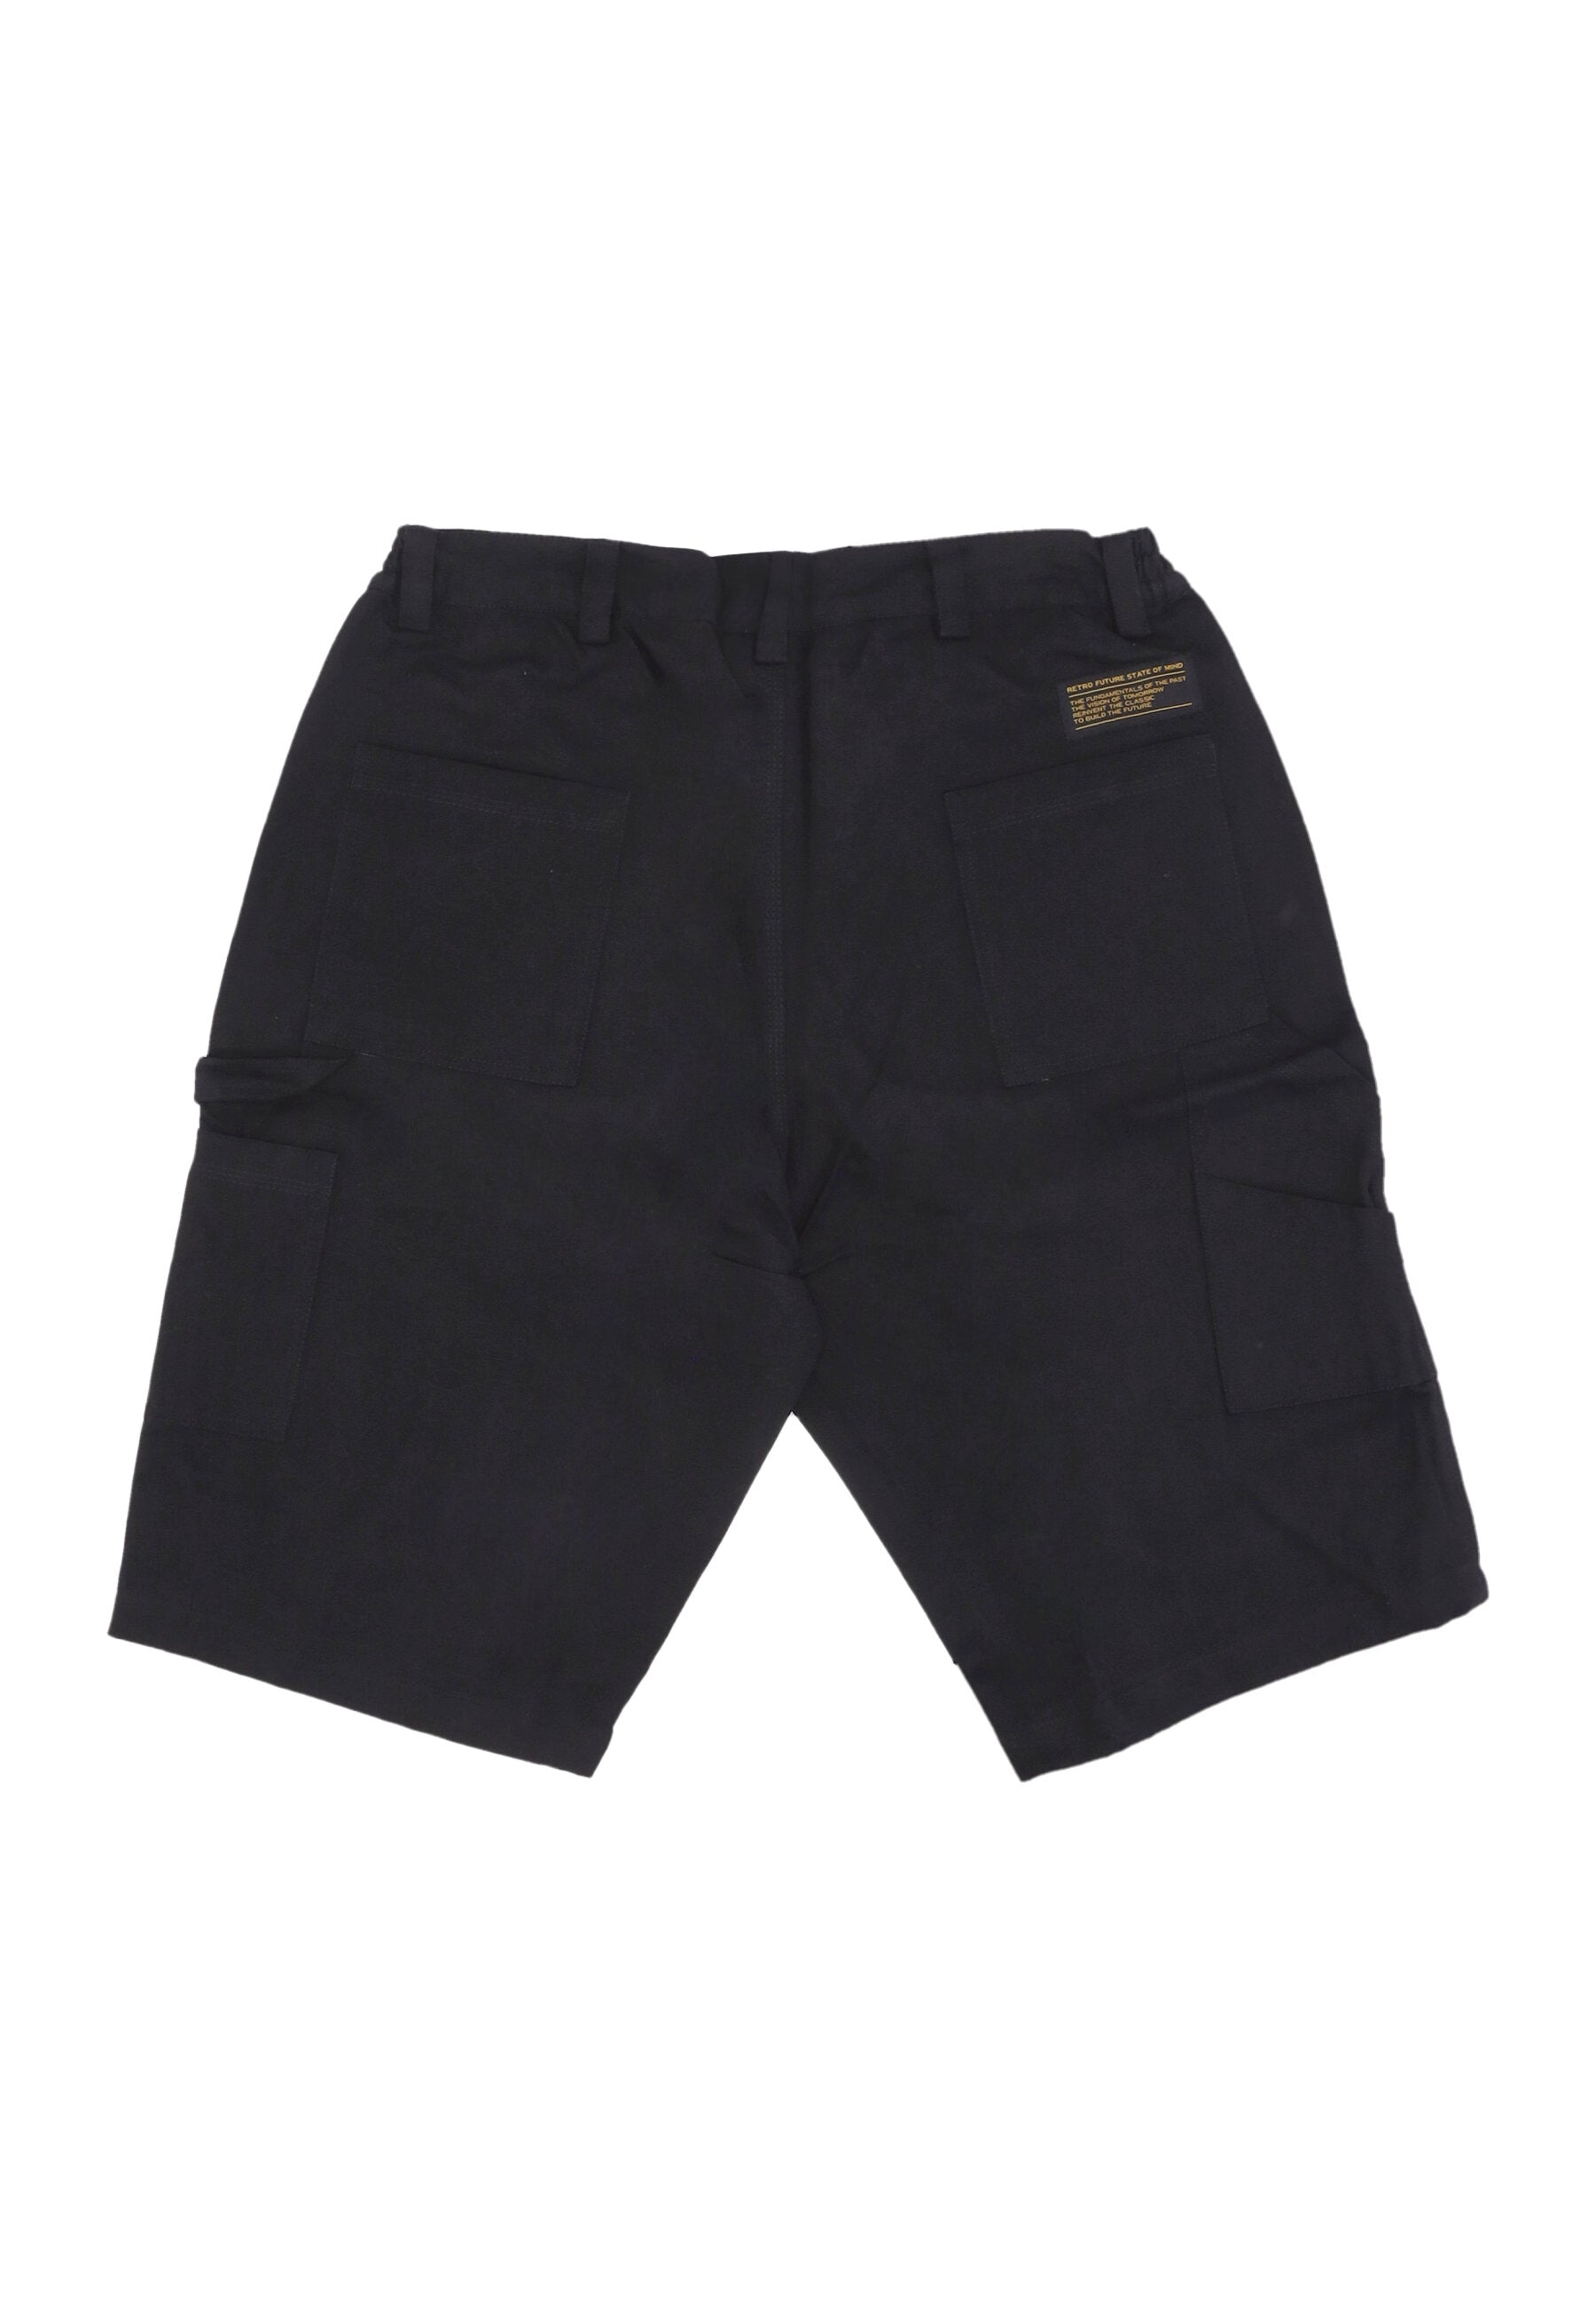 Pantalone Corto Uomo Worker Shorts Black BMSOM4104